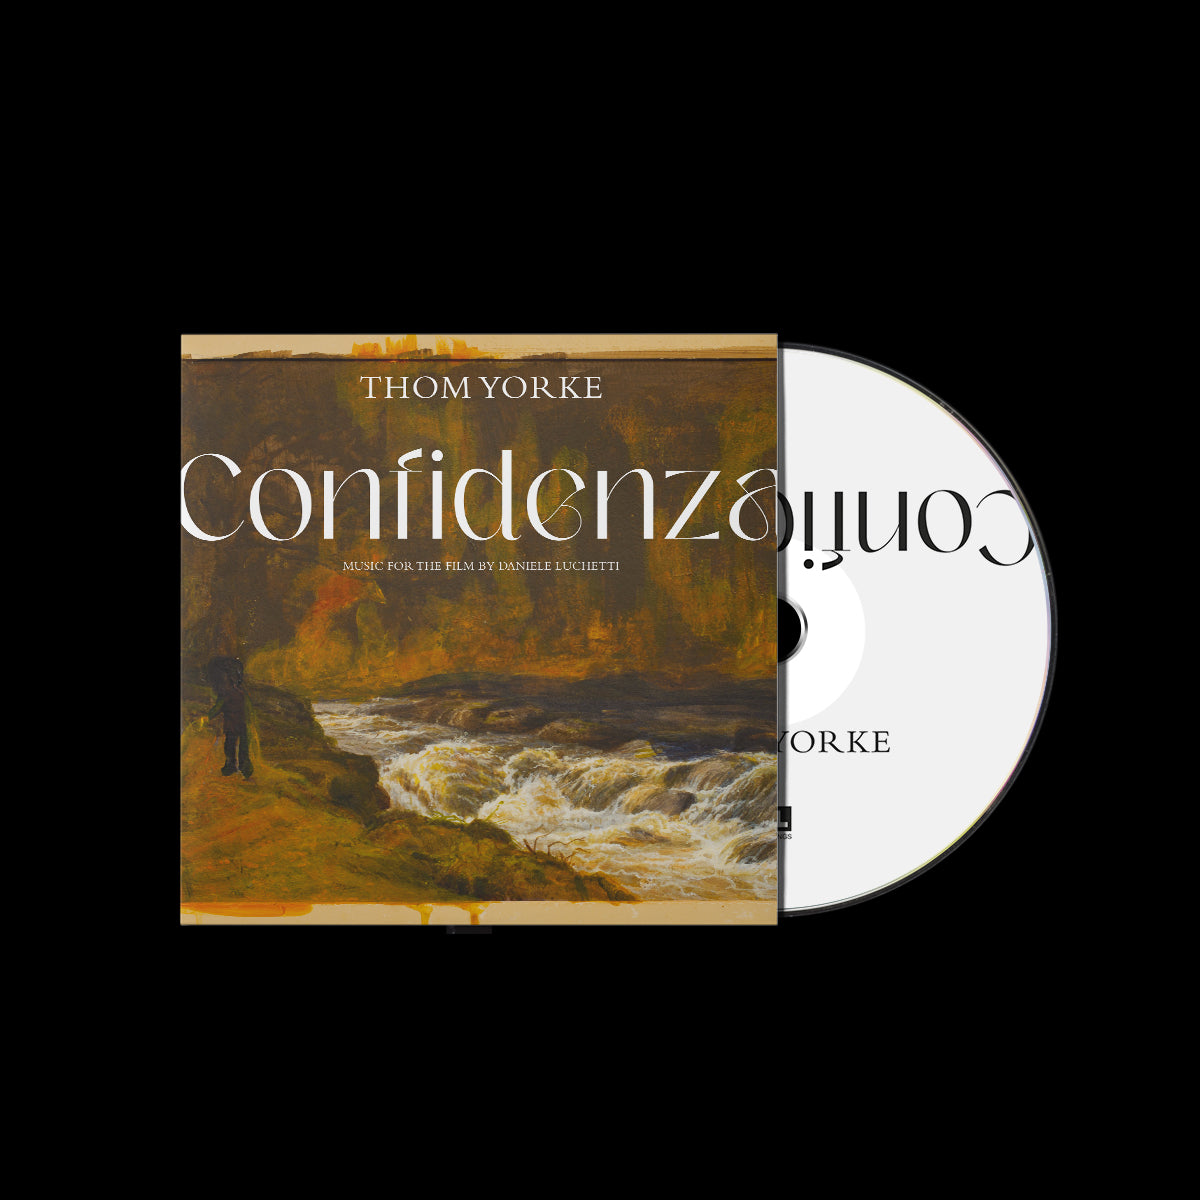 Thom Yorke - Confidenza (OST): CD